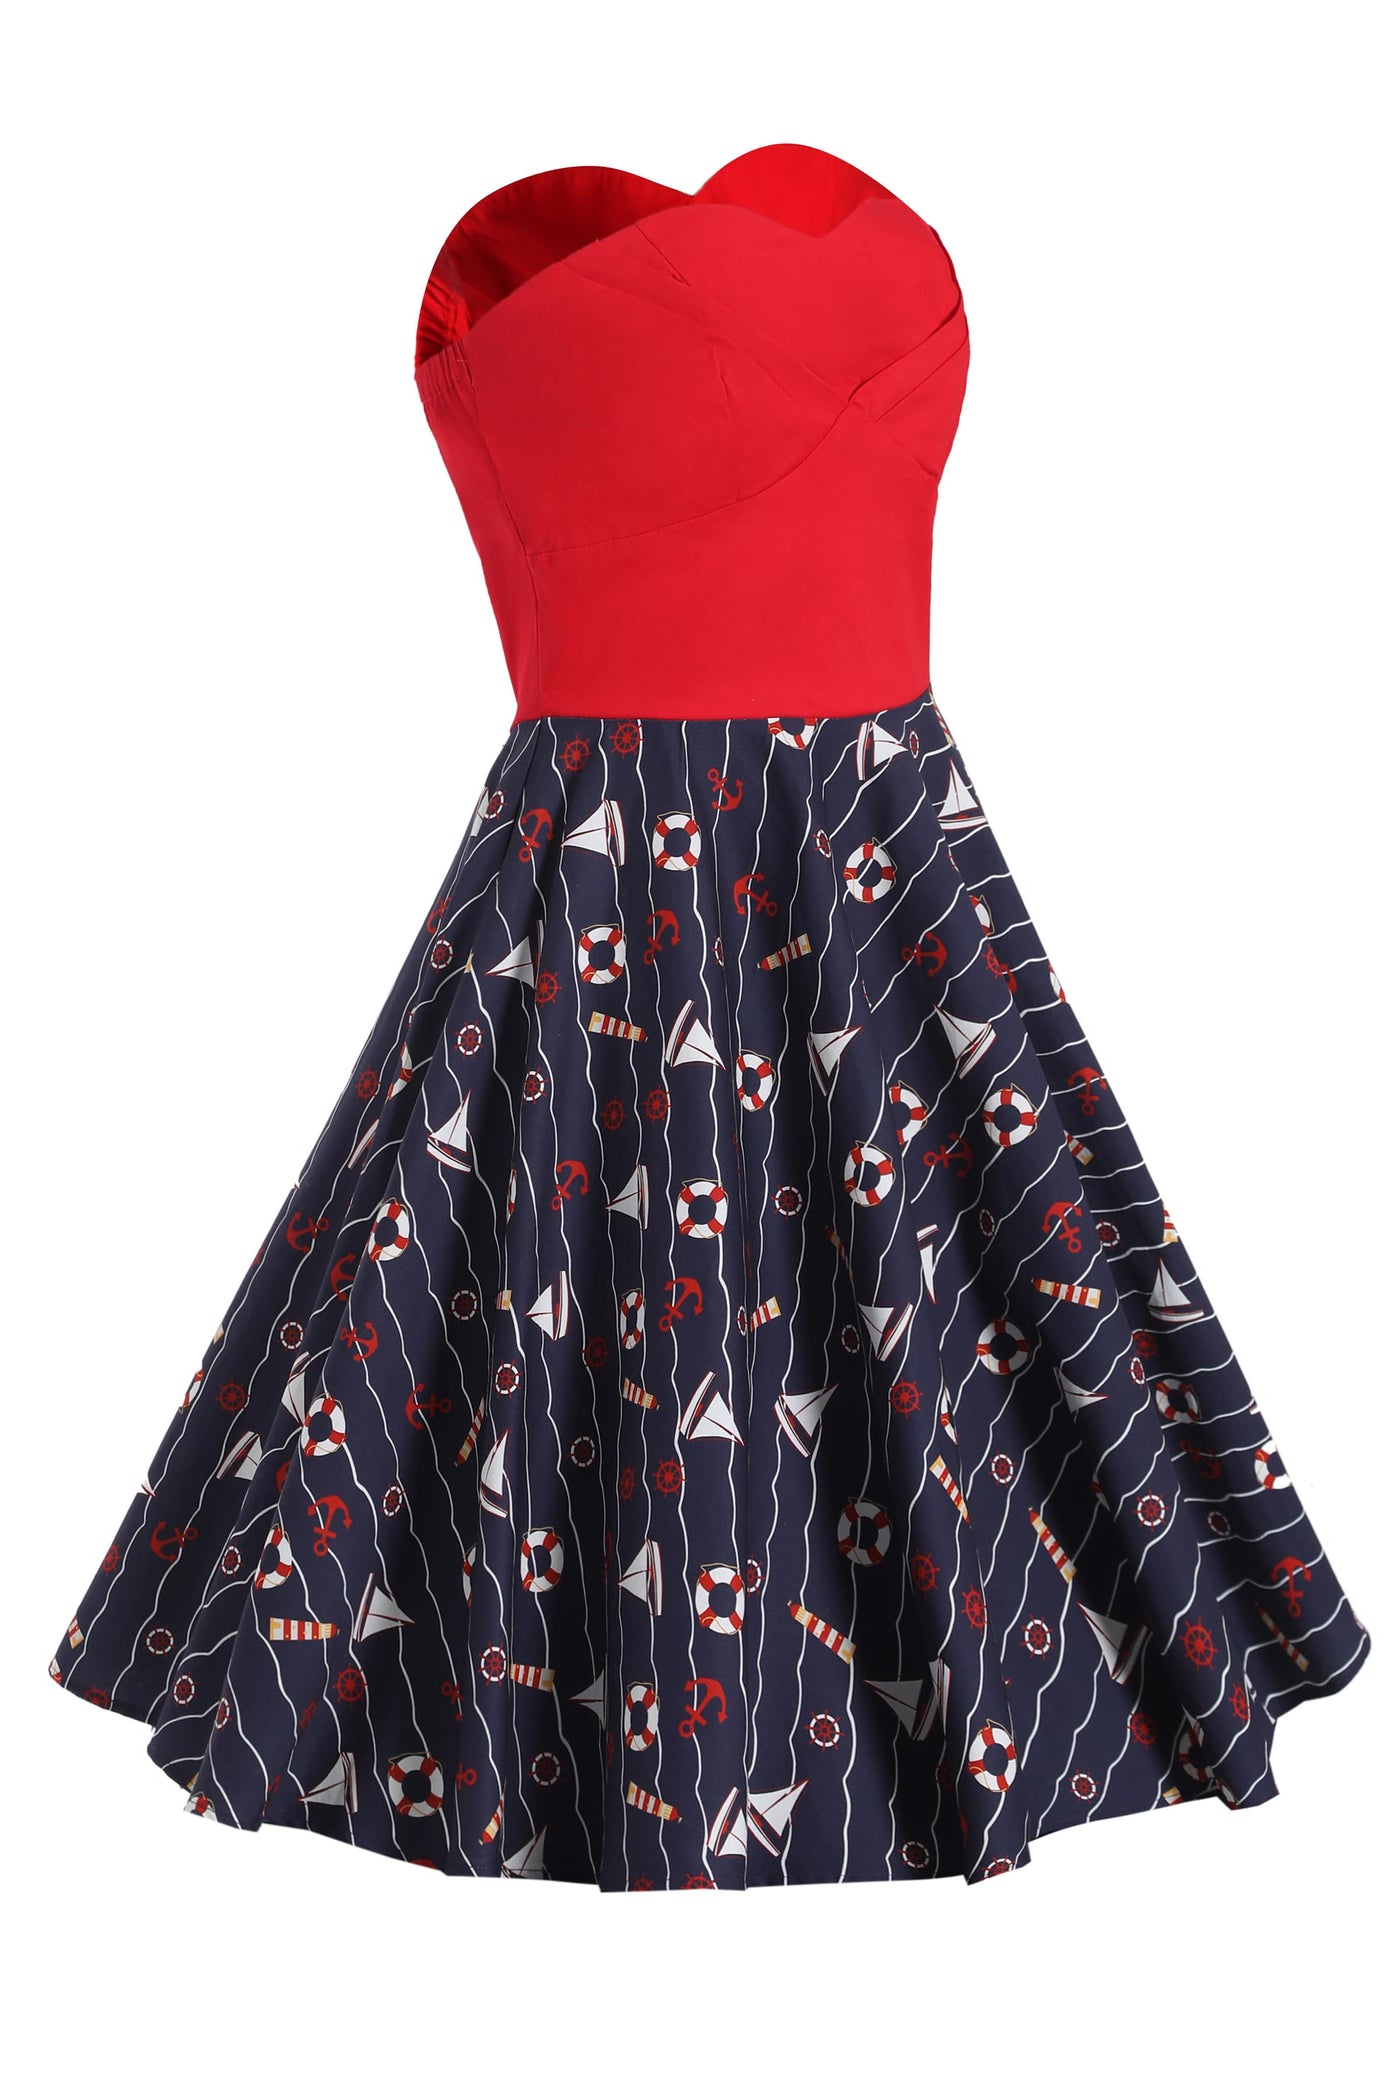 Red & Navy Nautical Strapless Dress